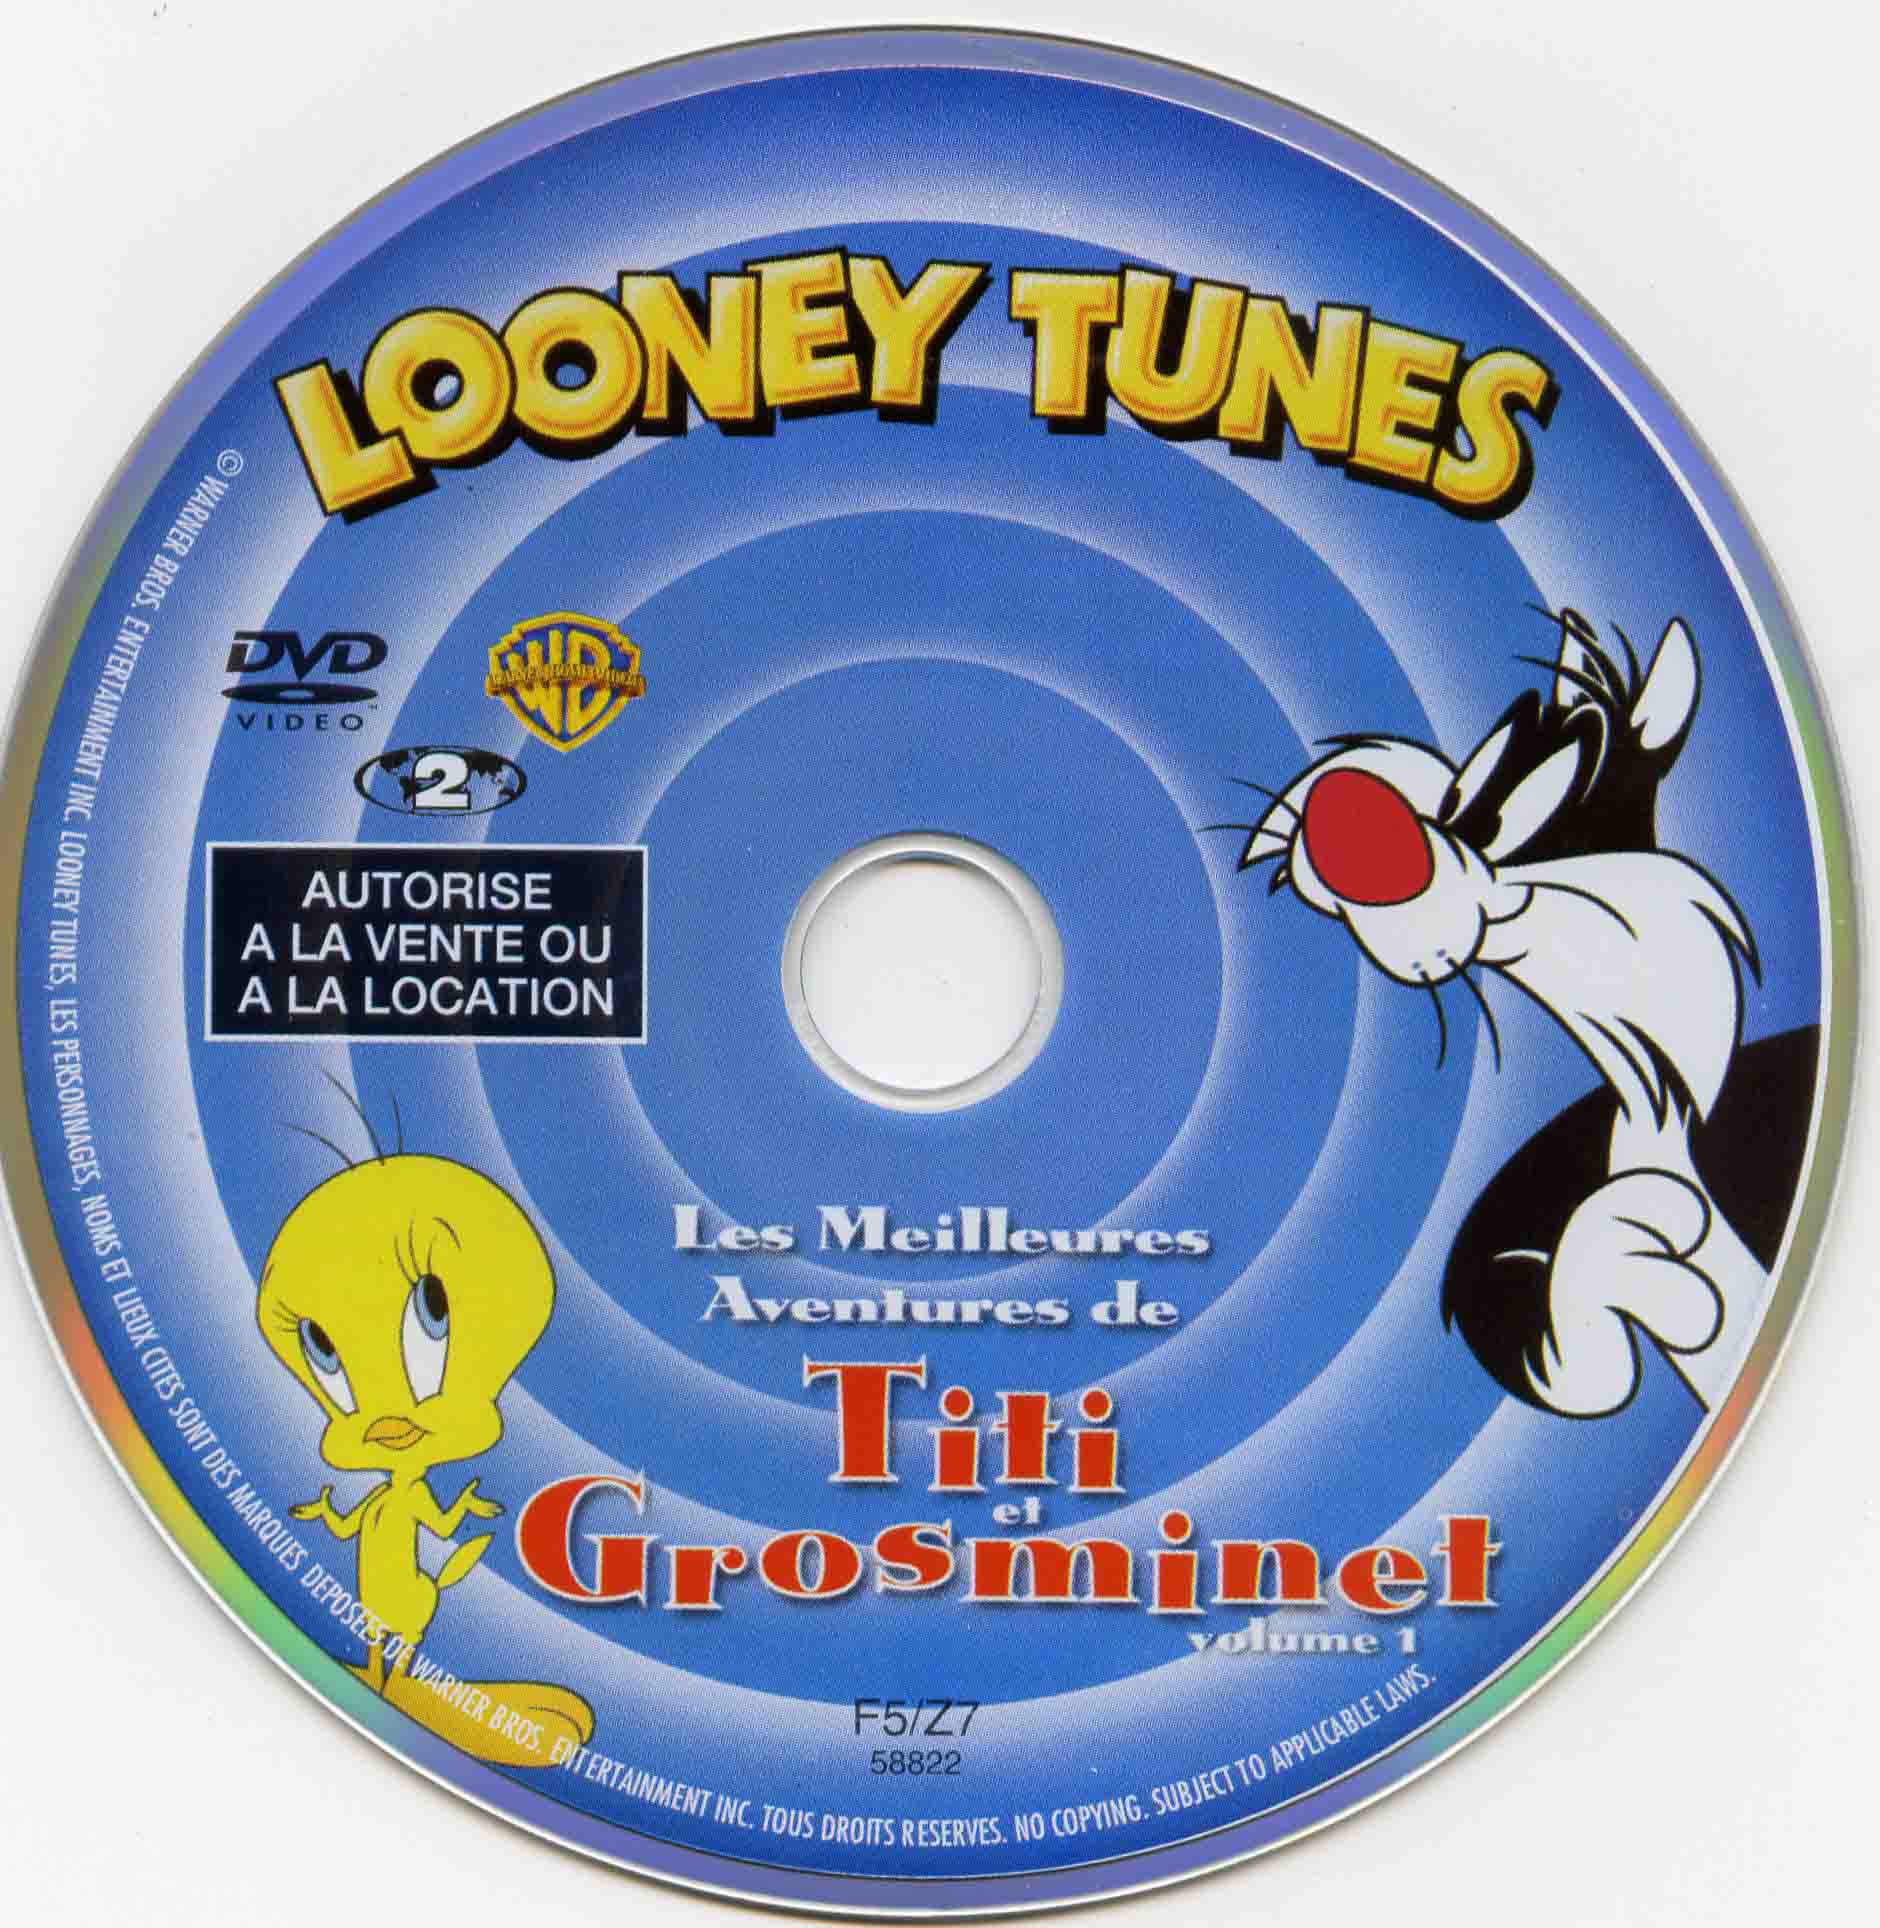 Looney Tunes - Les meilleures aventures de Titi et Grosminet - volume 1